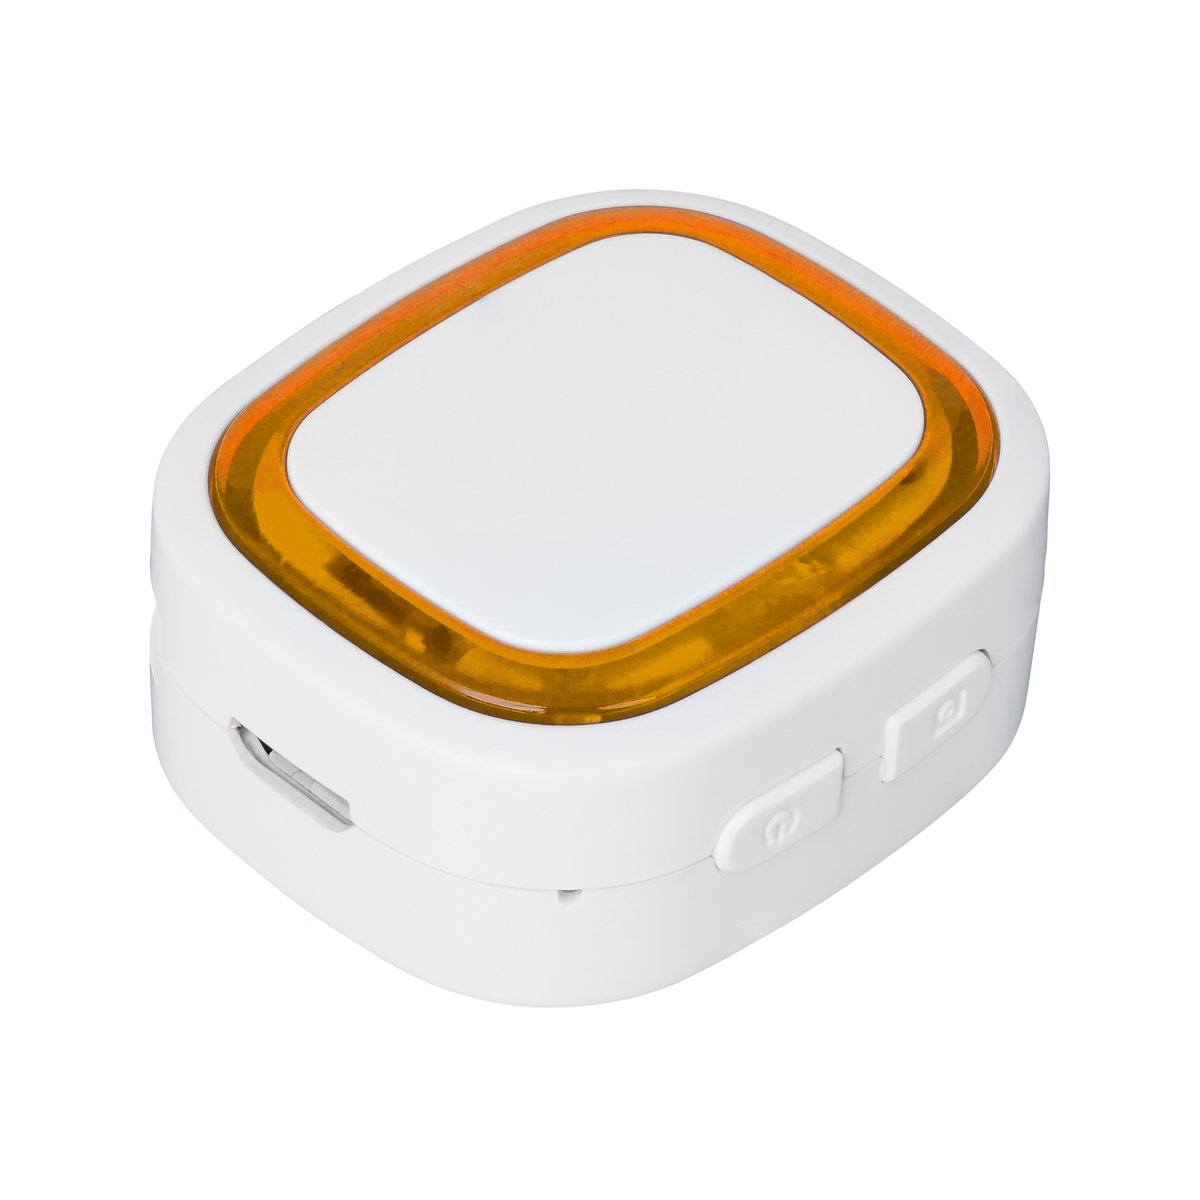 Bluetooth®-Adapter COLLECTION 500 orange